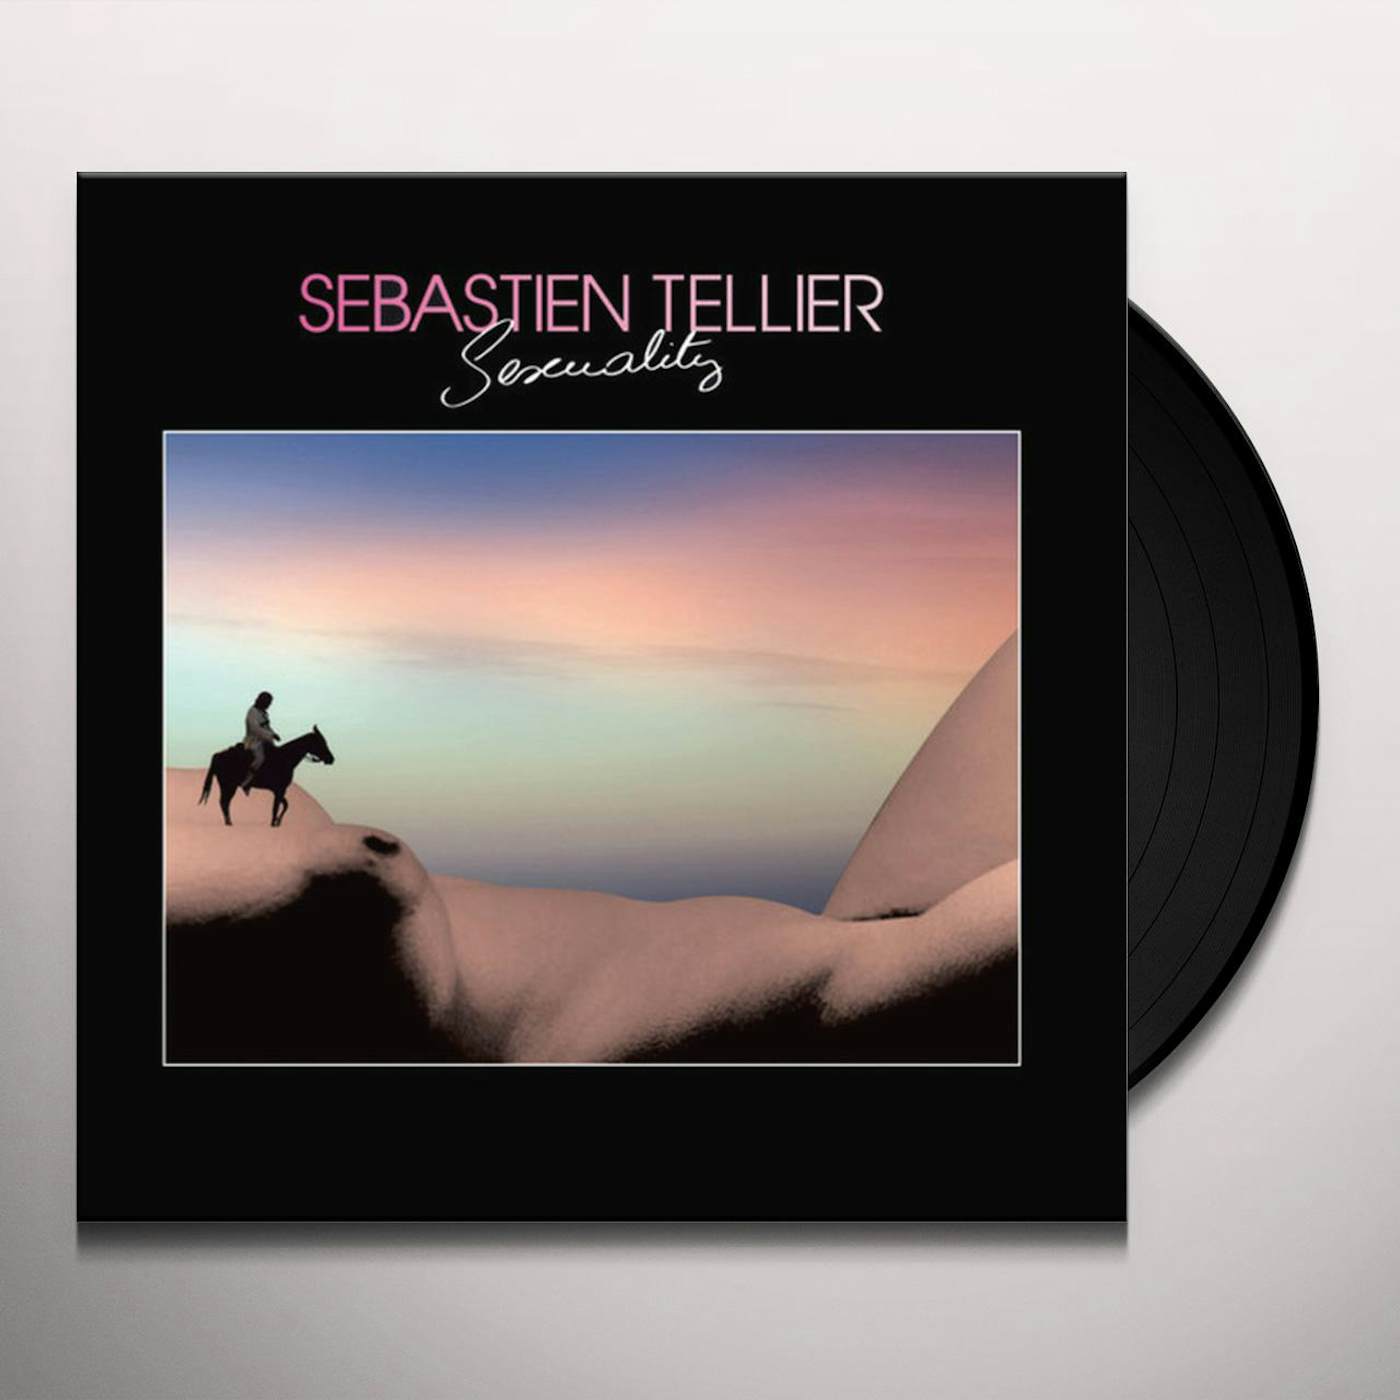 Sébastien Tellier Sexuality Vinyl Record